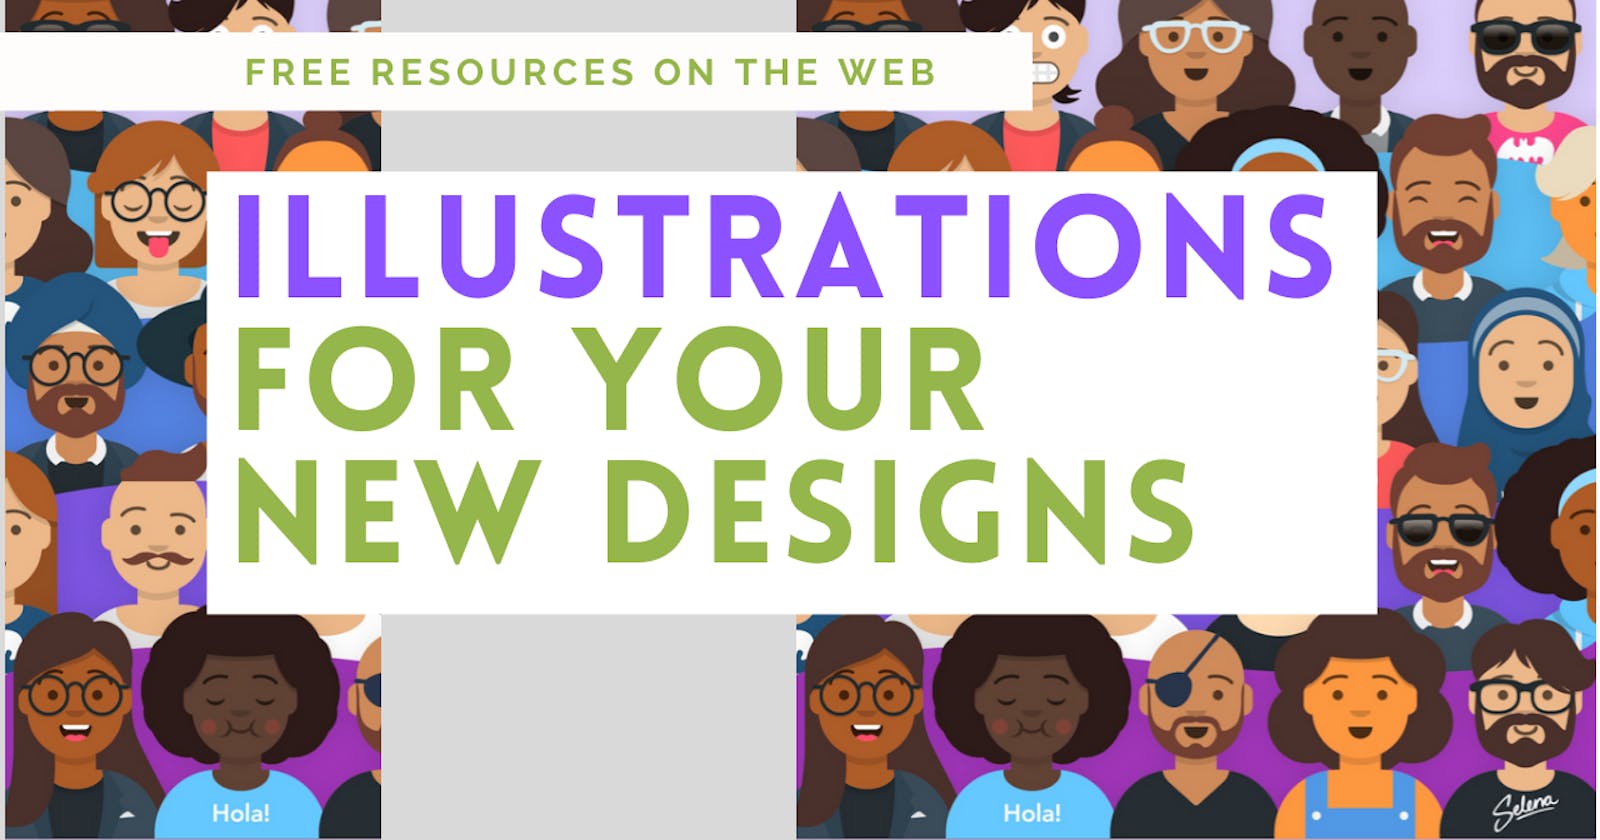 Free Websites for Illustrations every Web Designer should know